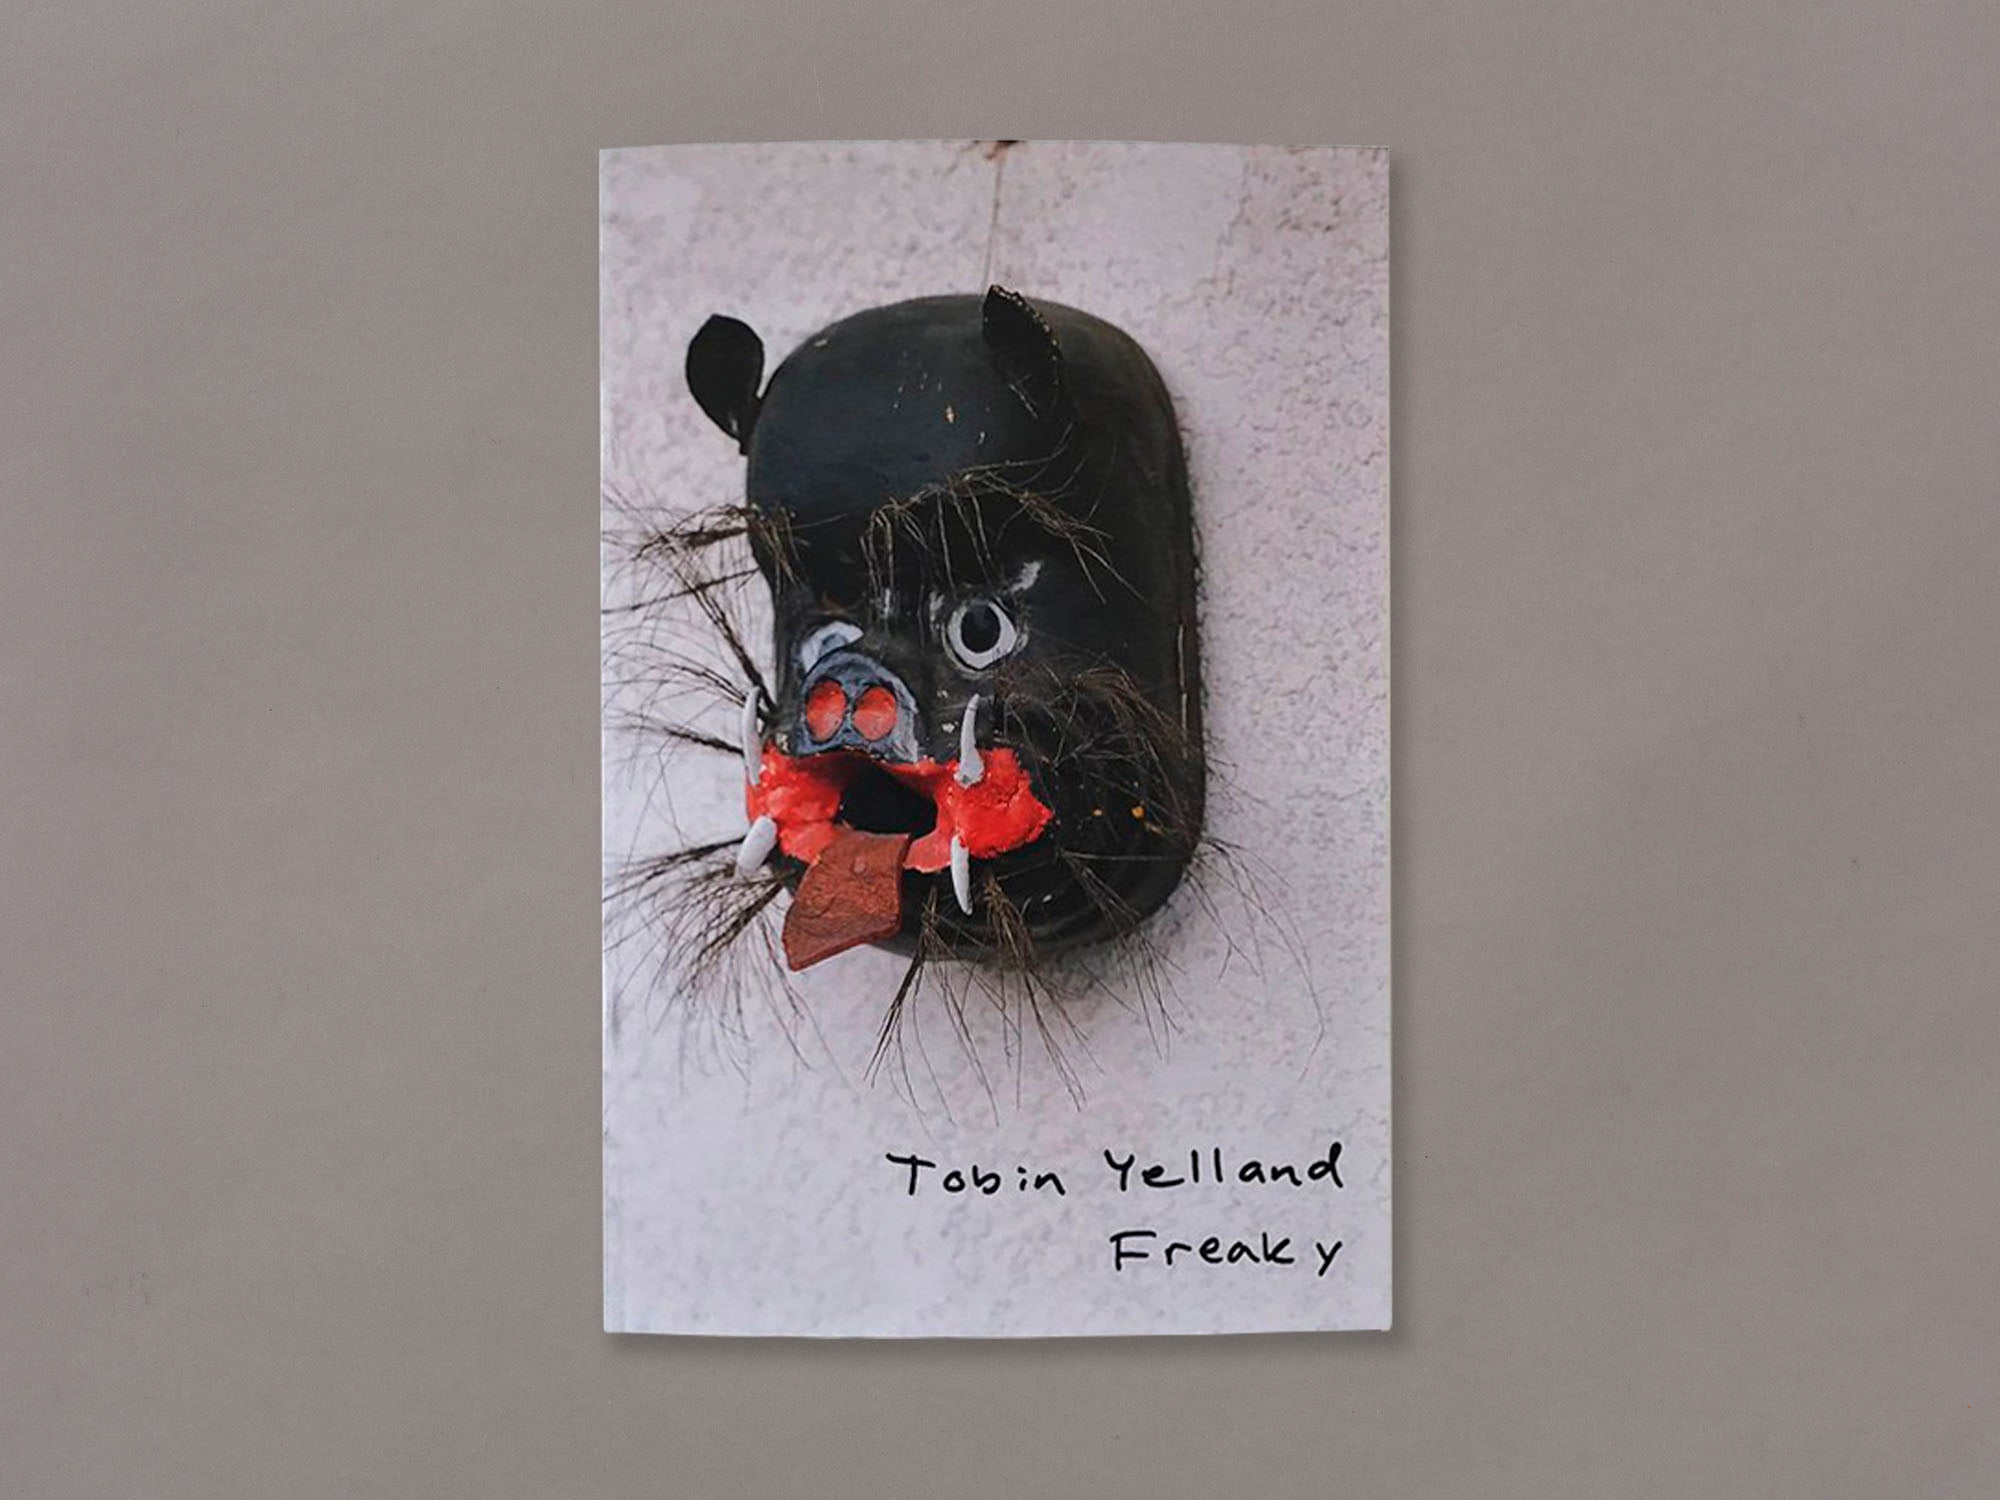 Tobin Yelland - Freaky